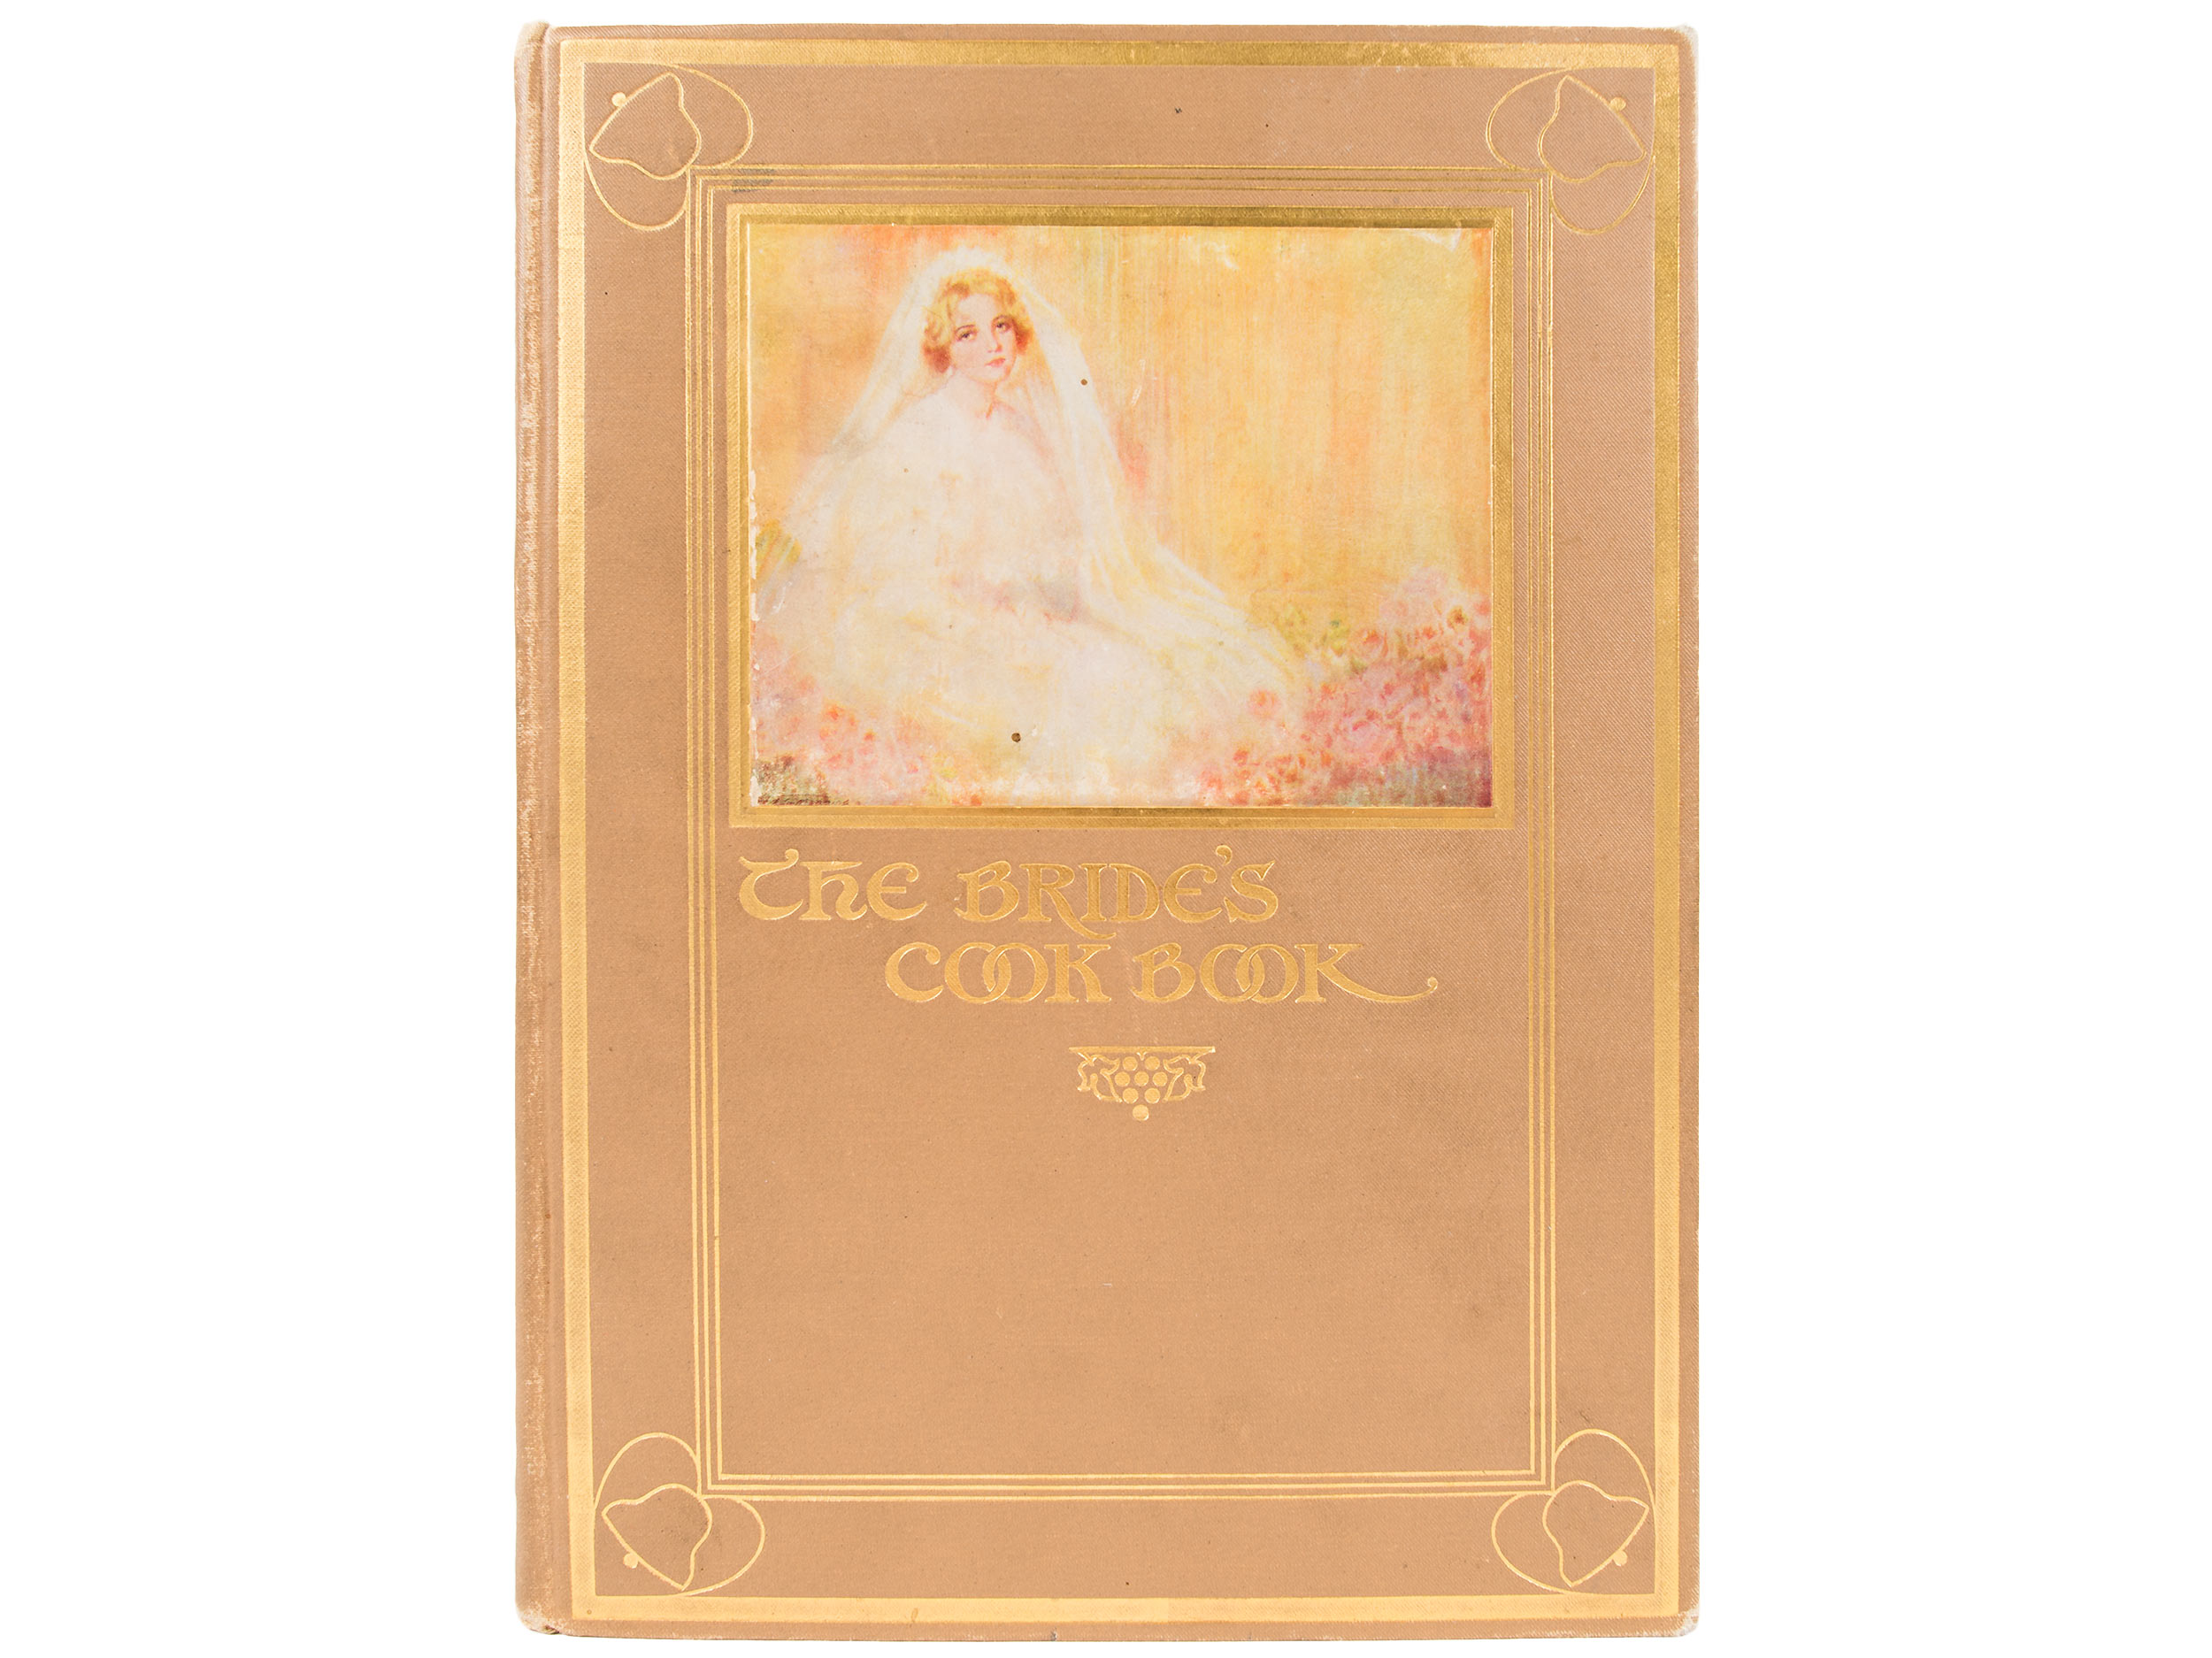 The Bride’s Cook Book, 1908